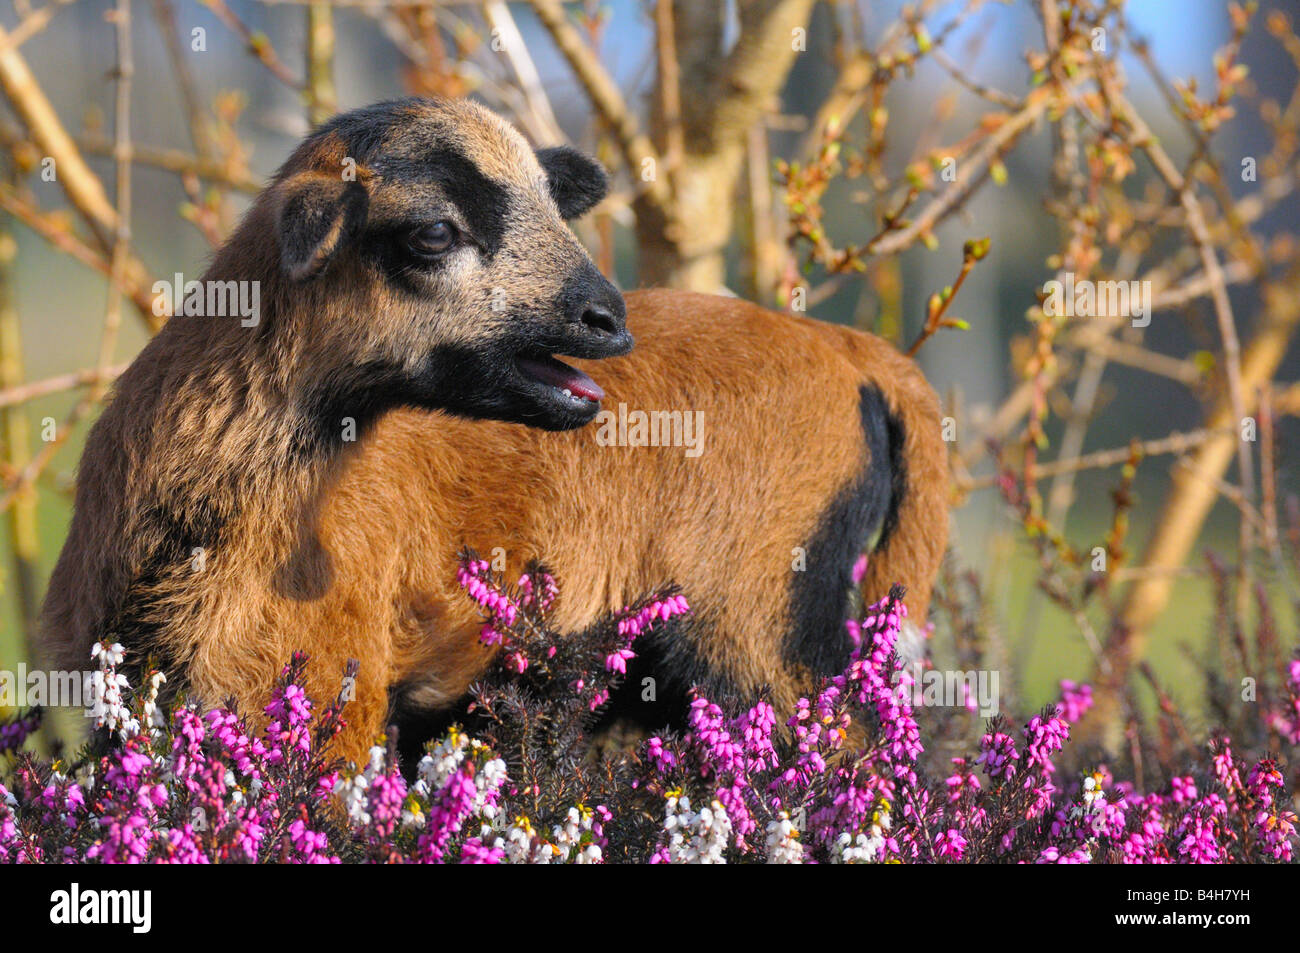 Close-up of kid goat standing in Heather Erica Herbacea (Erica carnea) field Stock Photo